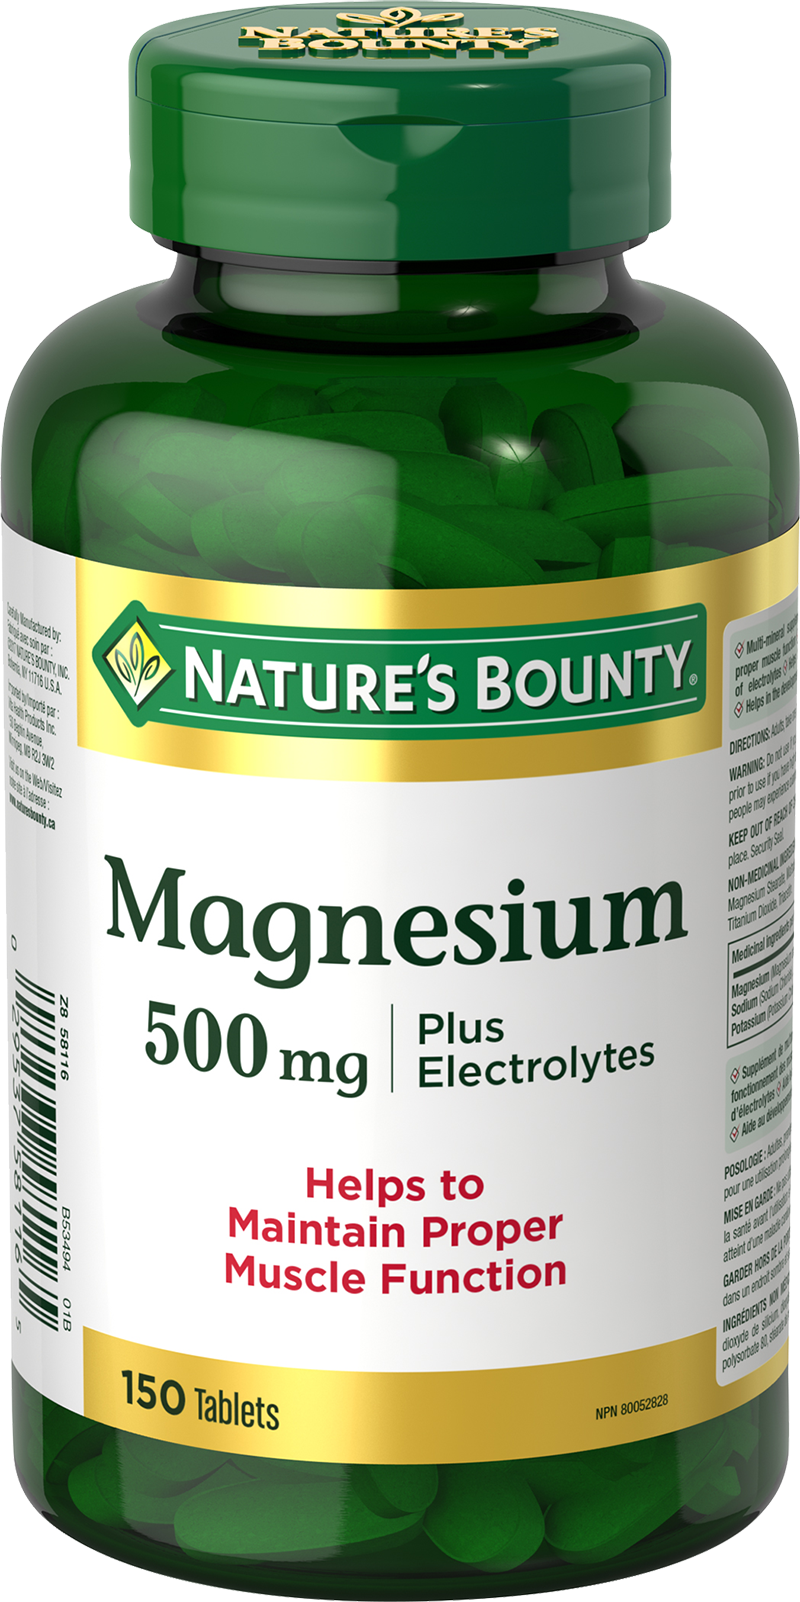 Magnesium Plus Electrolytes